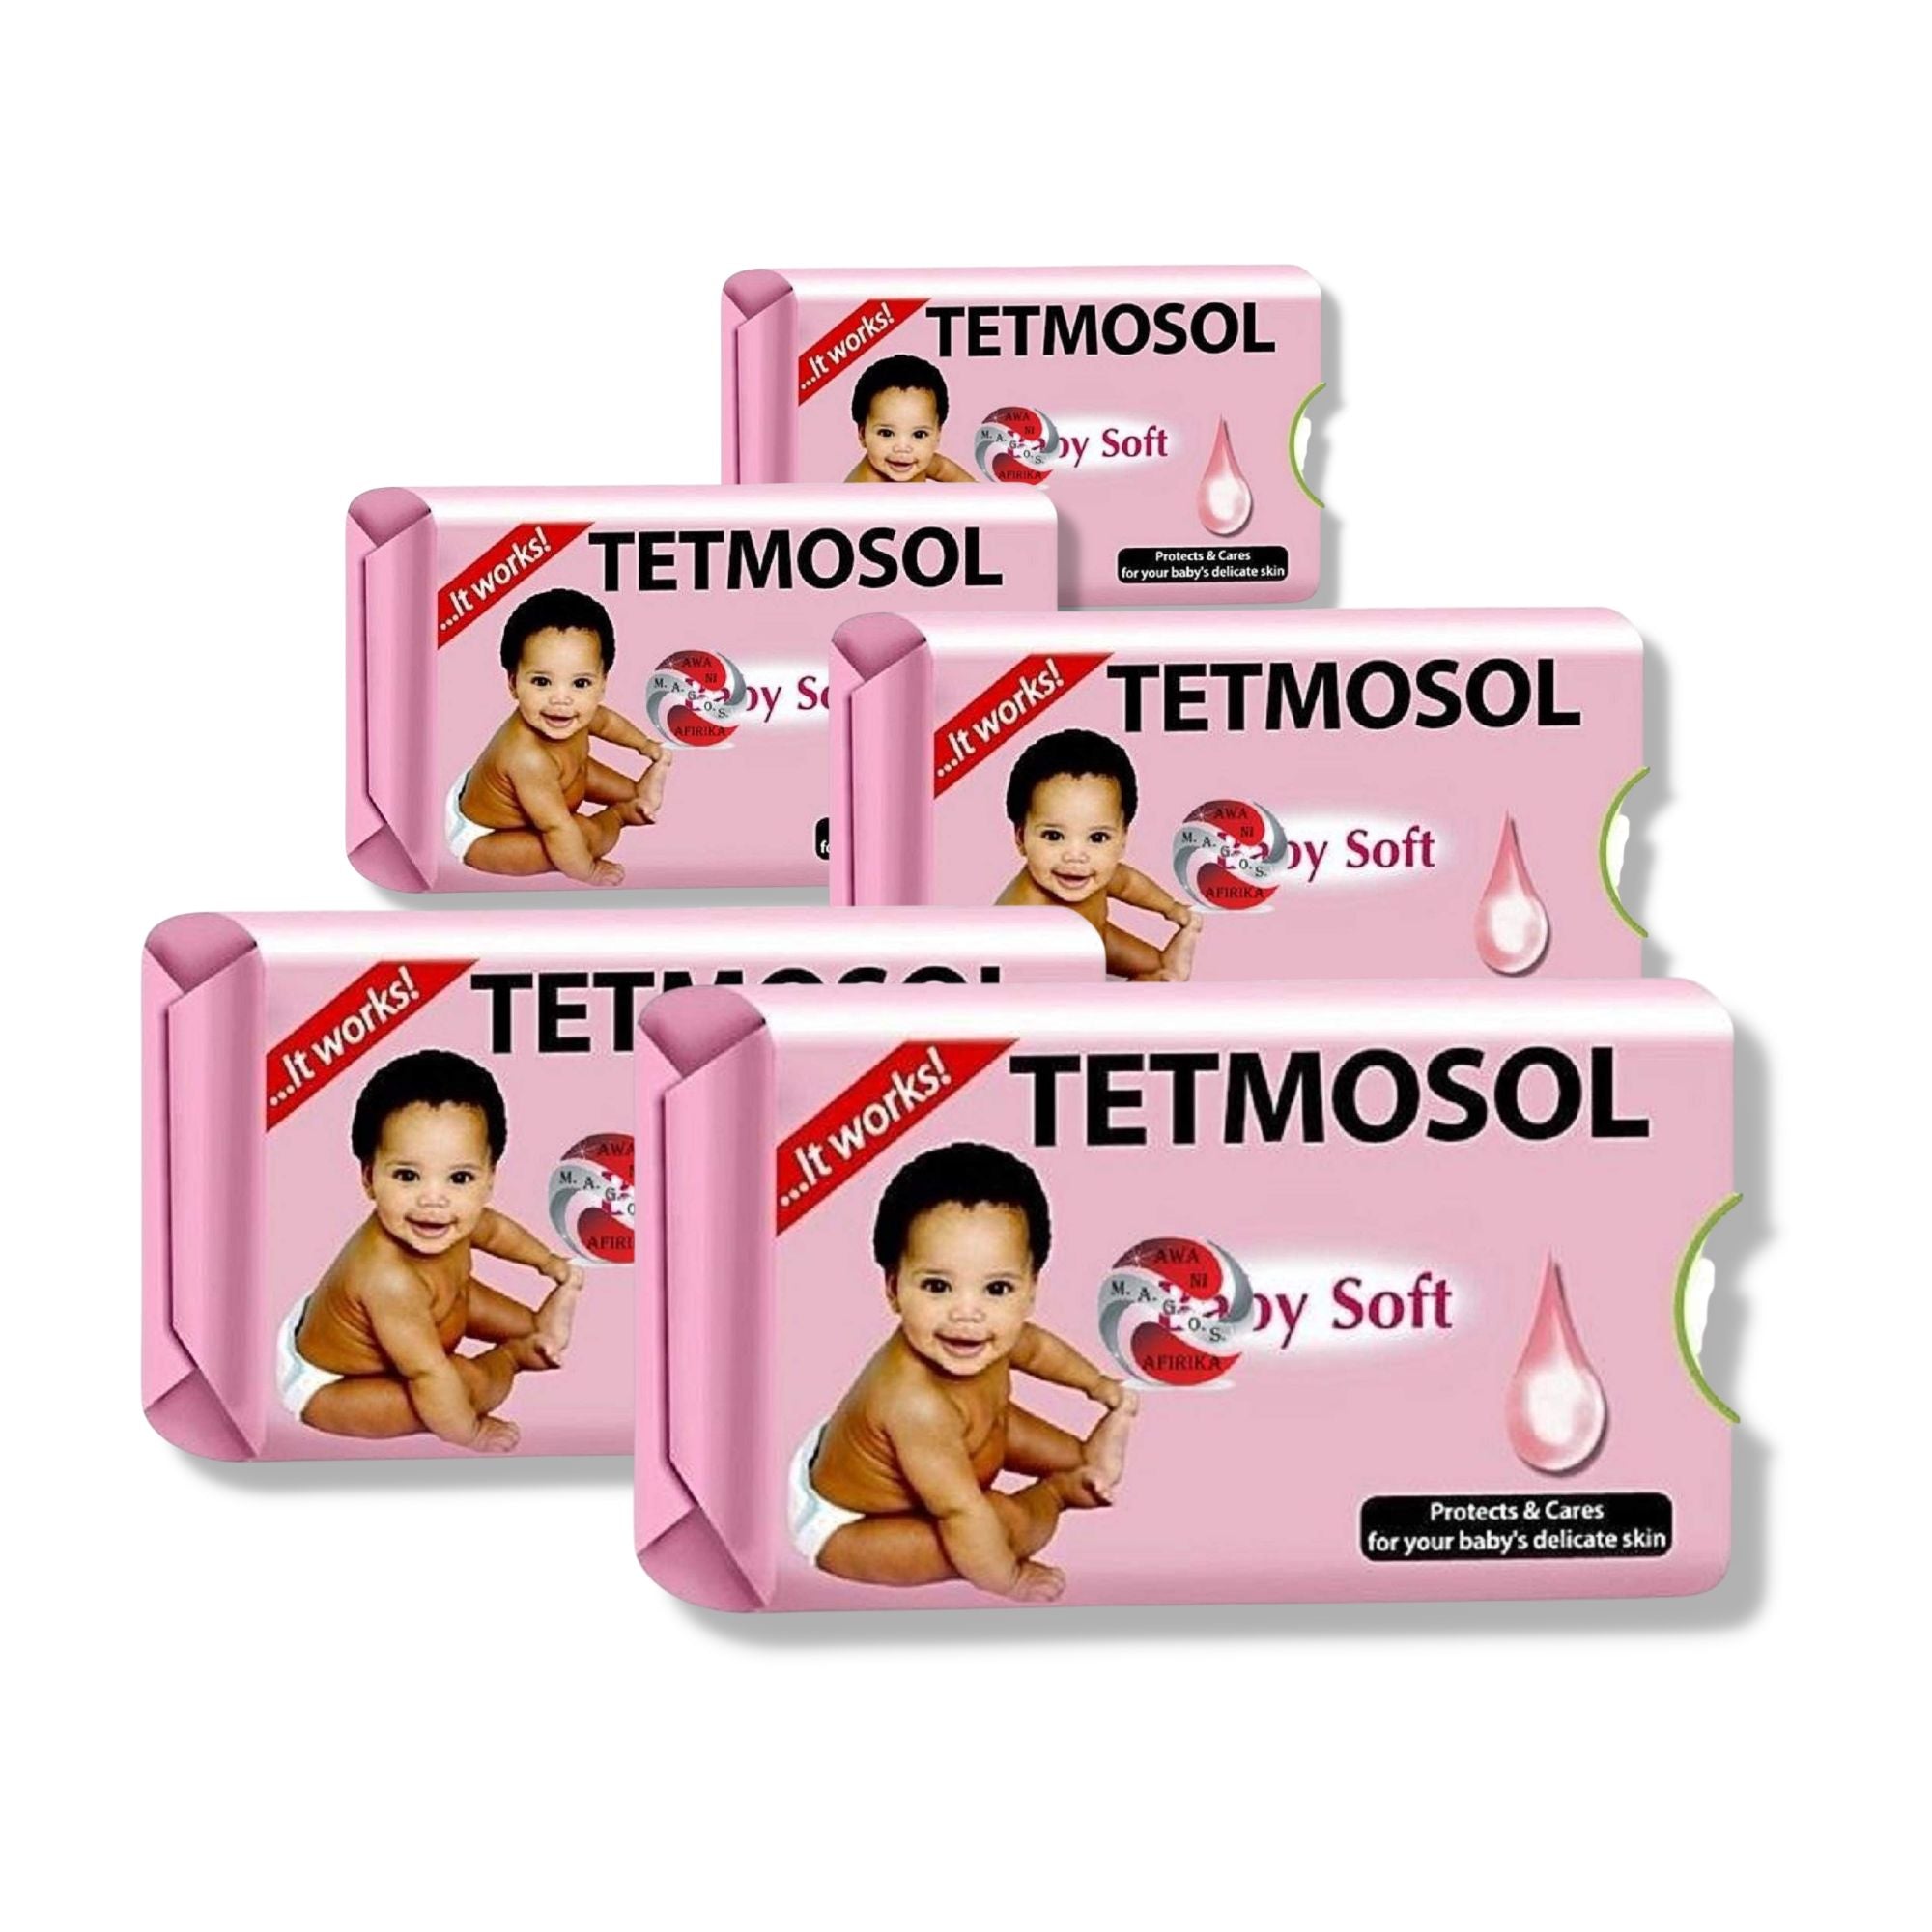 NatoGears Tetmosol Baby Soft Soap 75g Packs